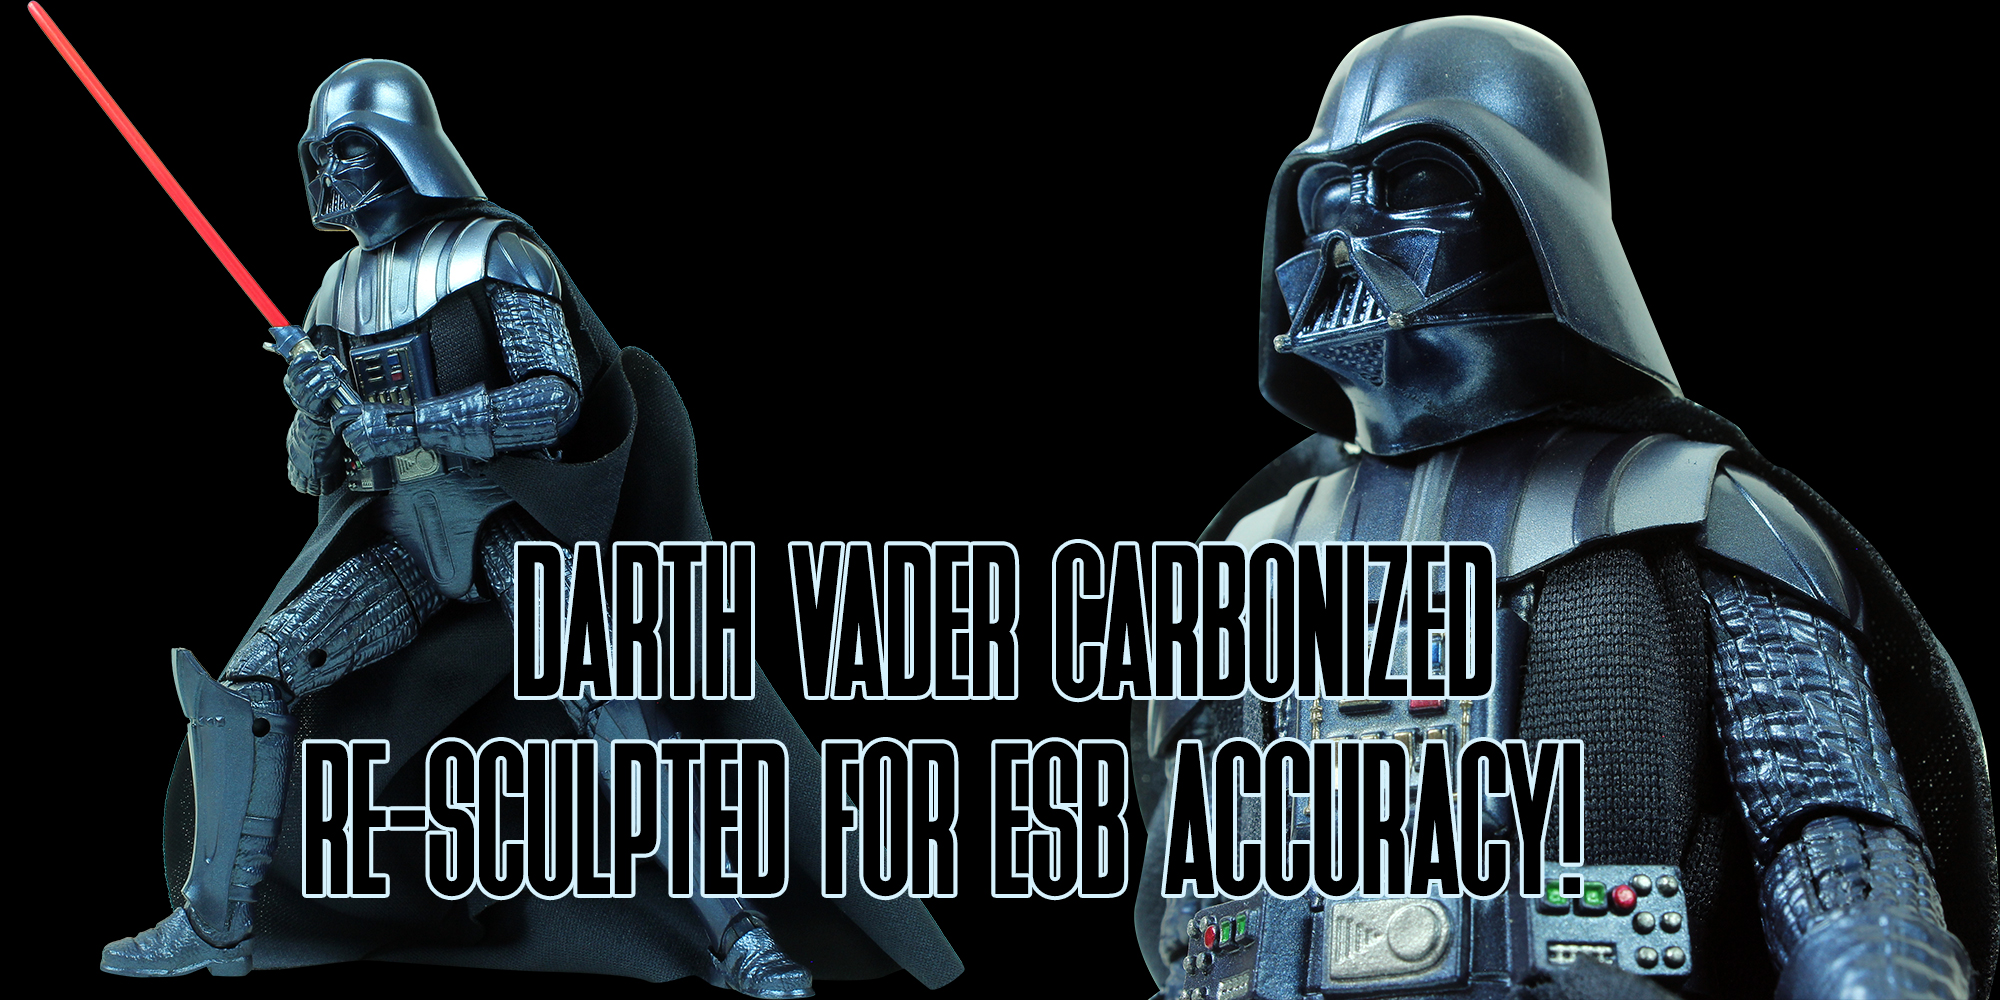 Black Series Darth Vader Carbonized